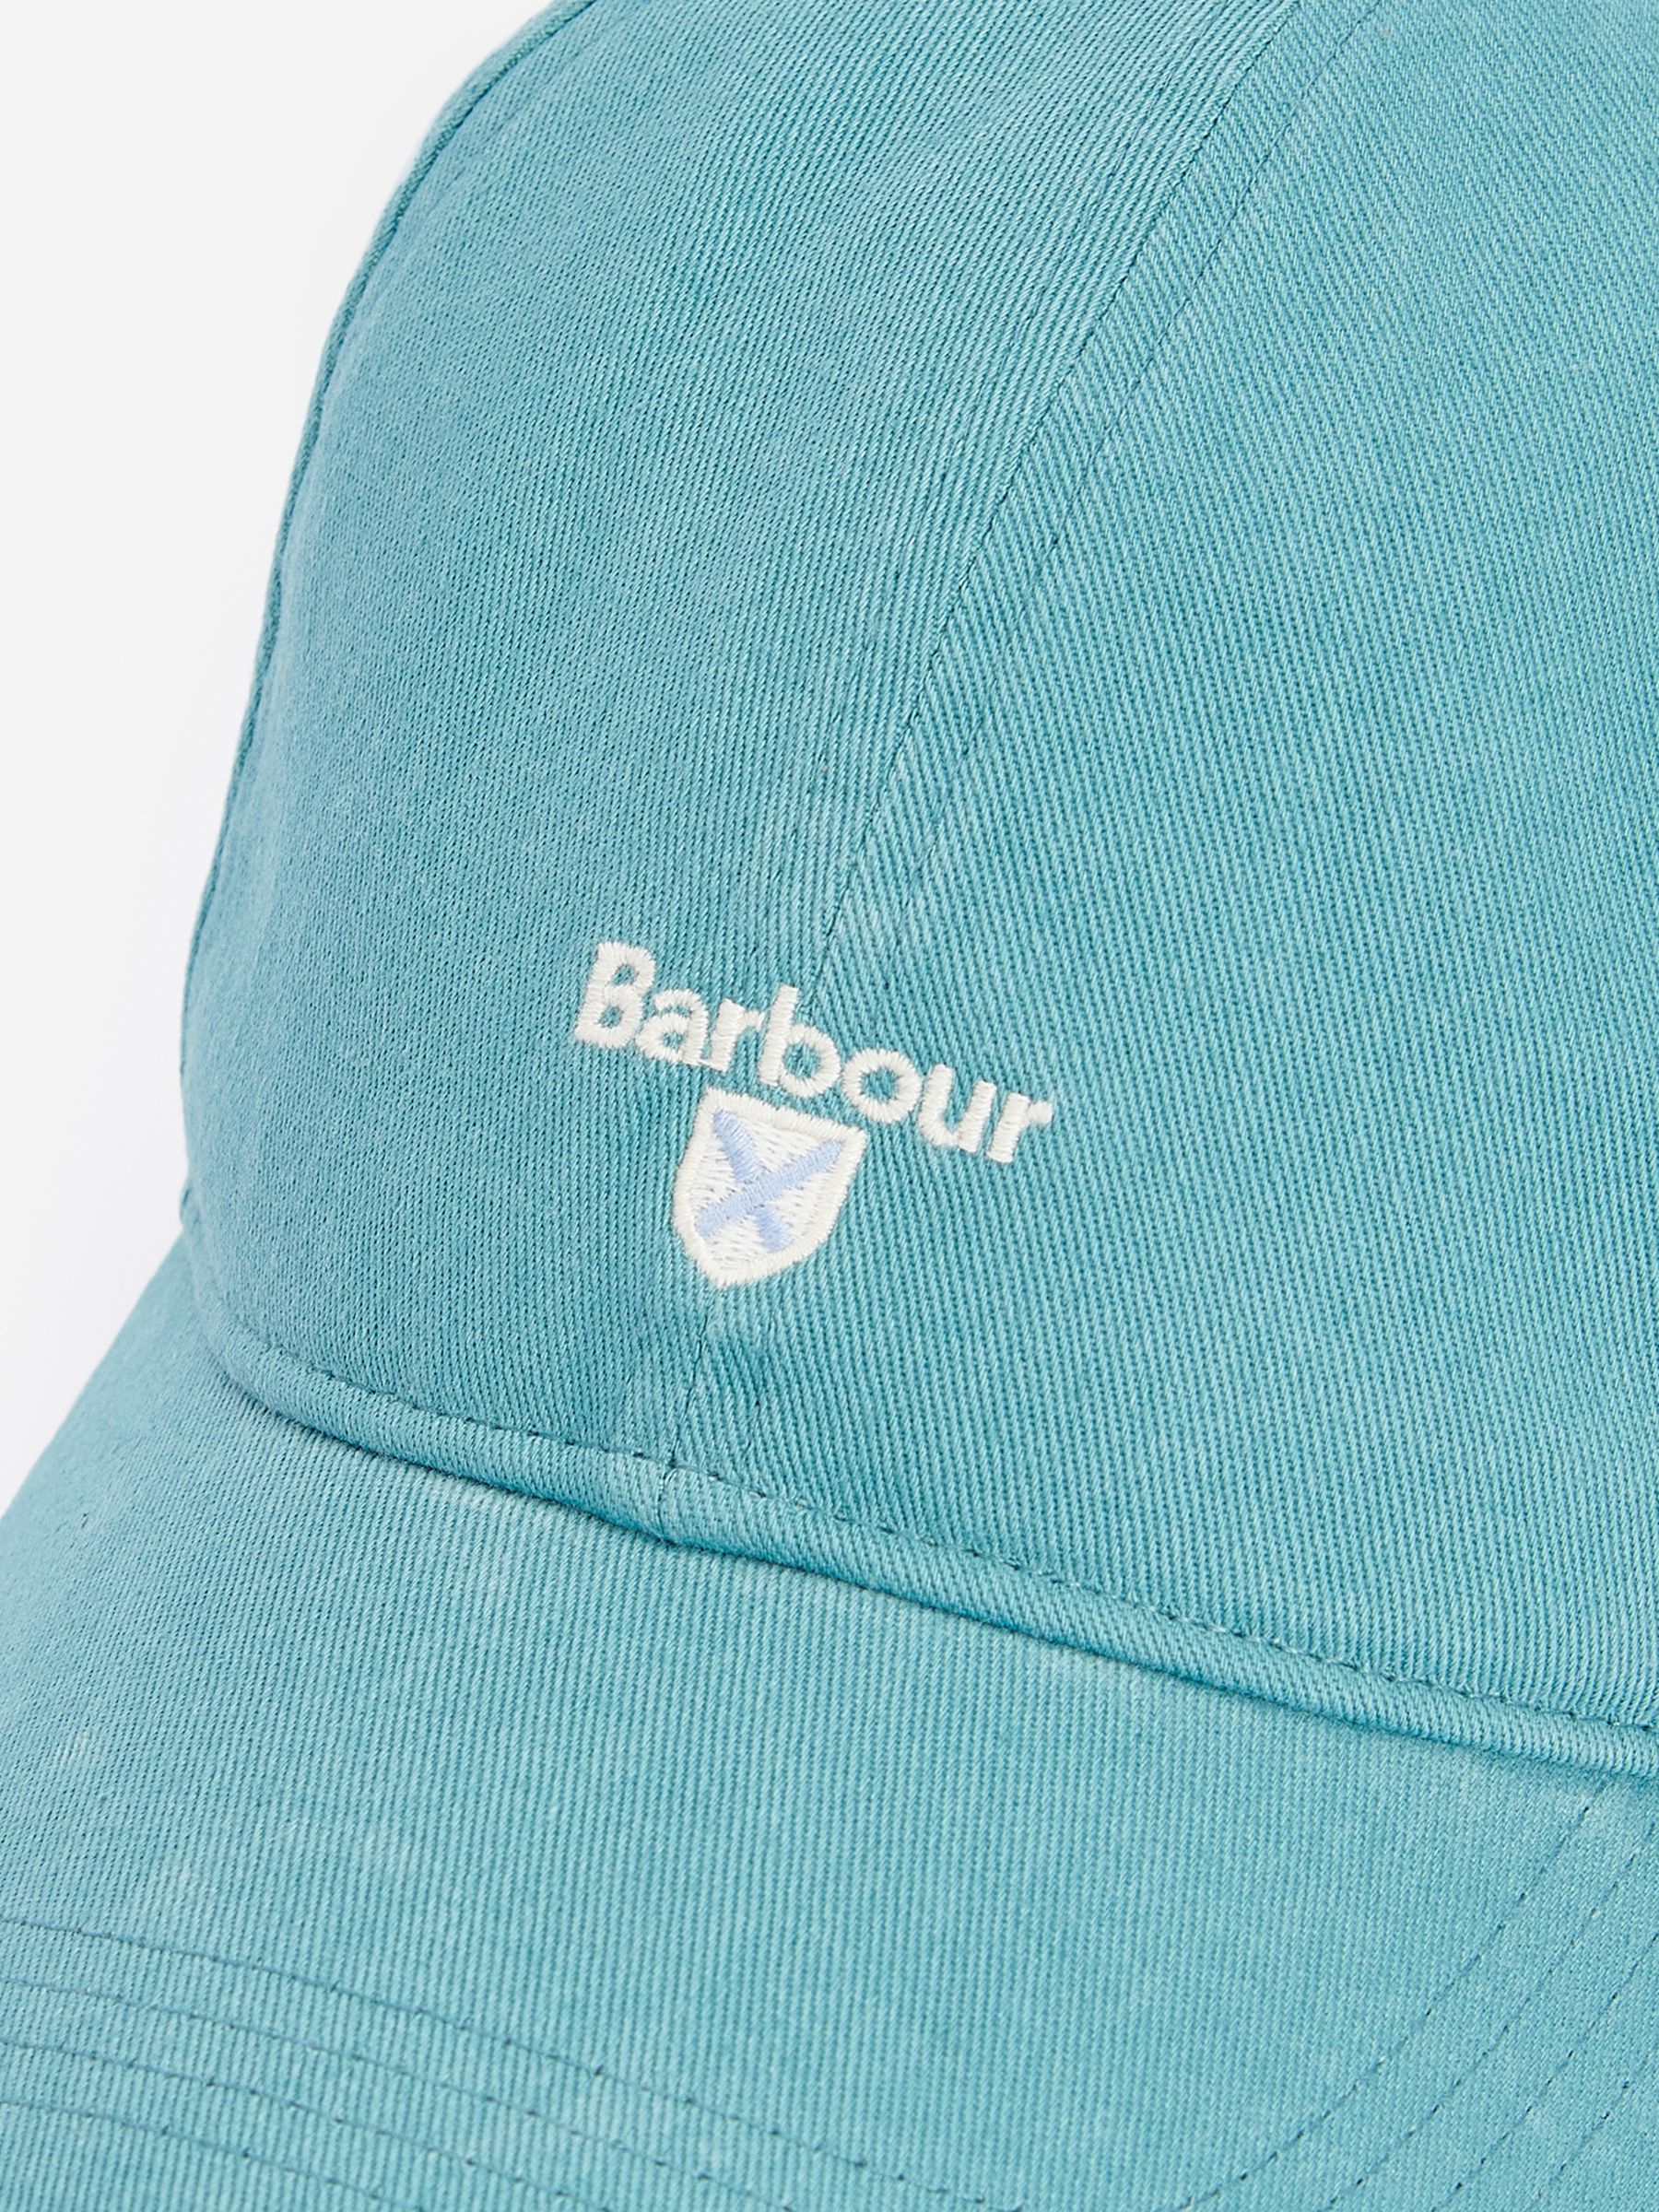 Barbour Cascade Sports Cap, Brittany Blue